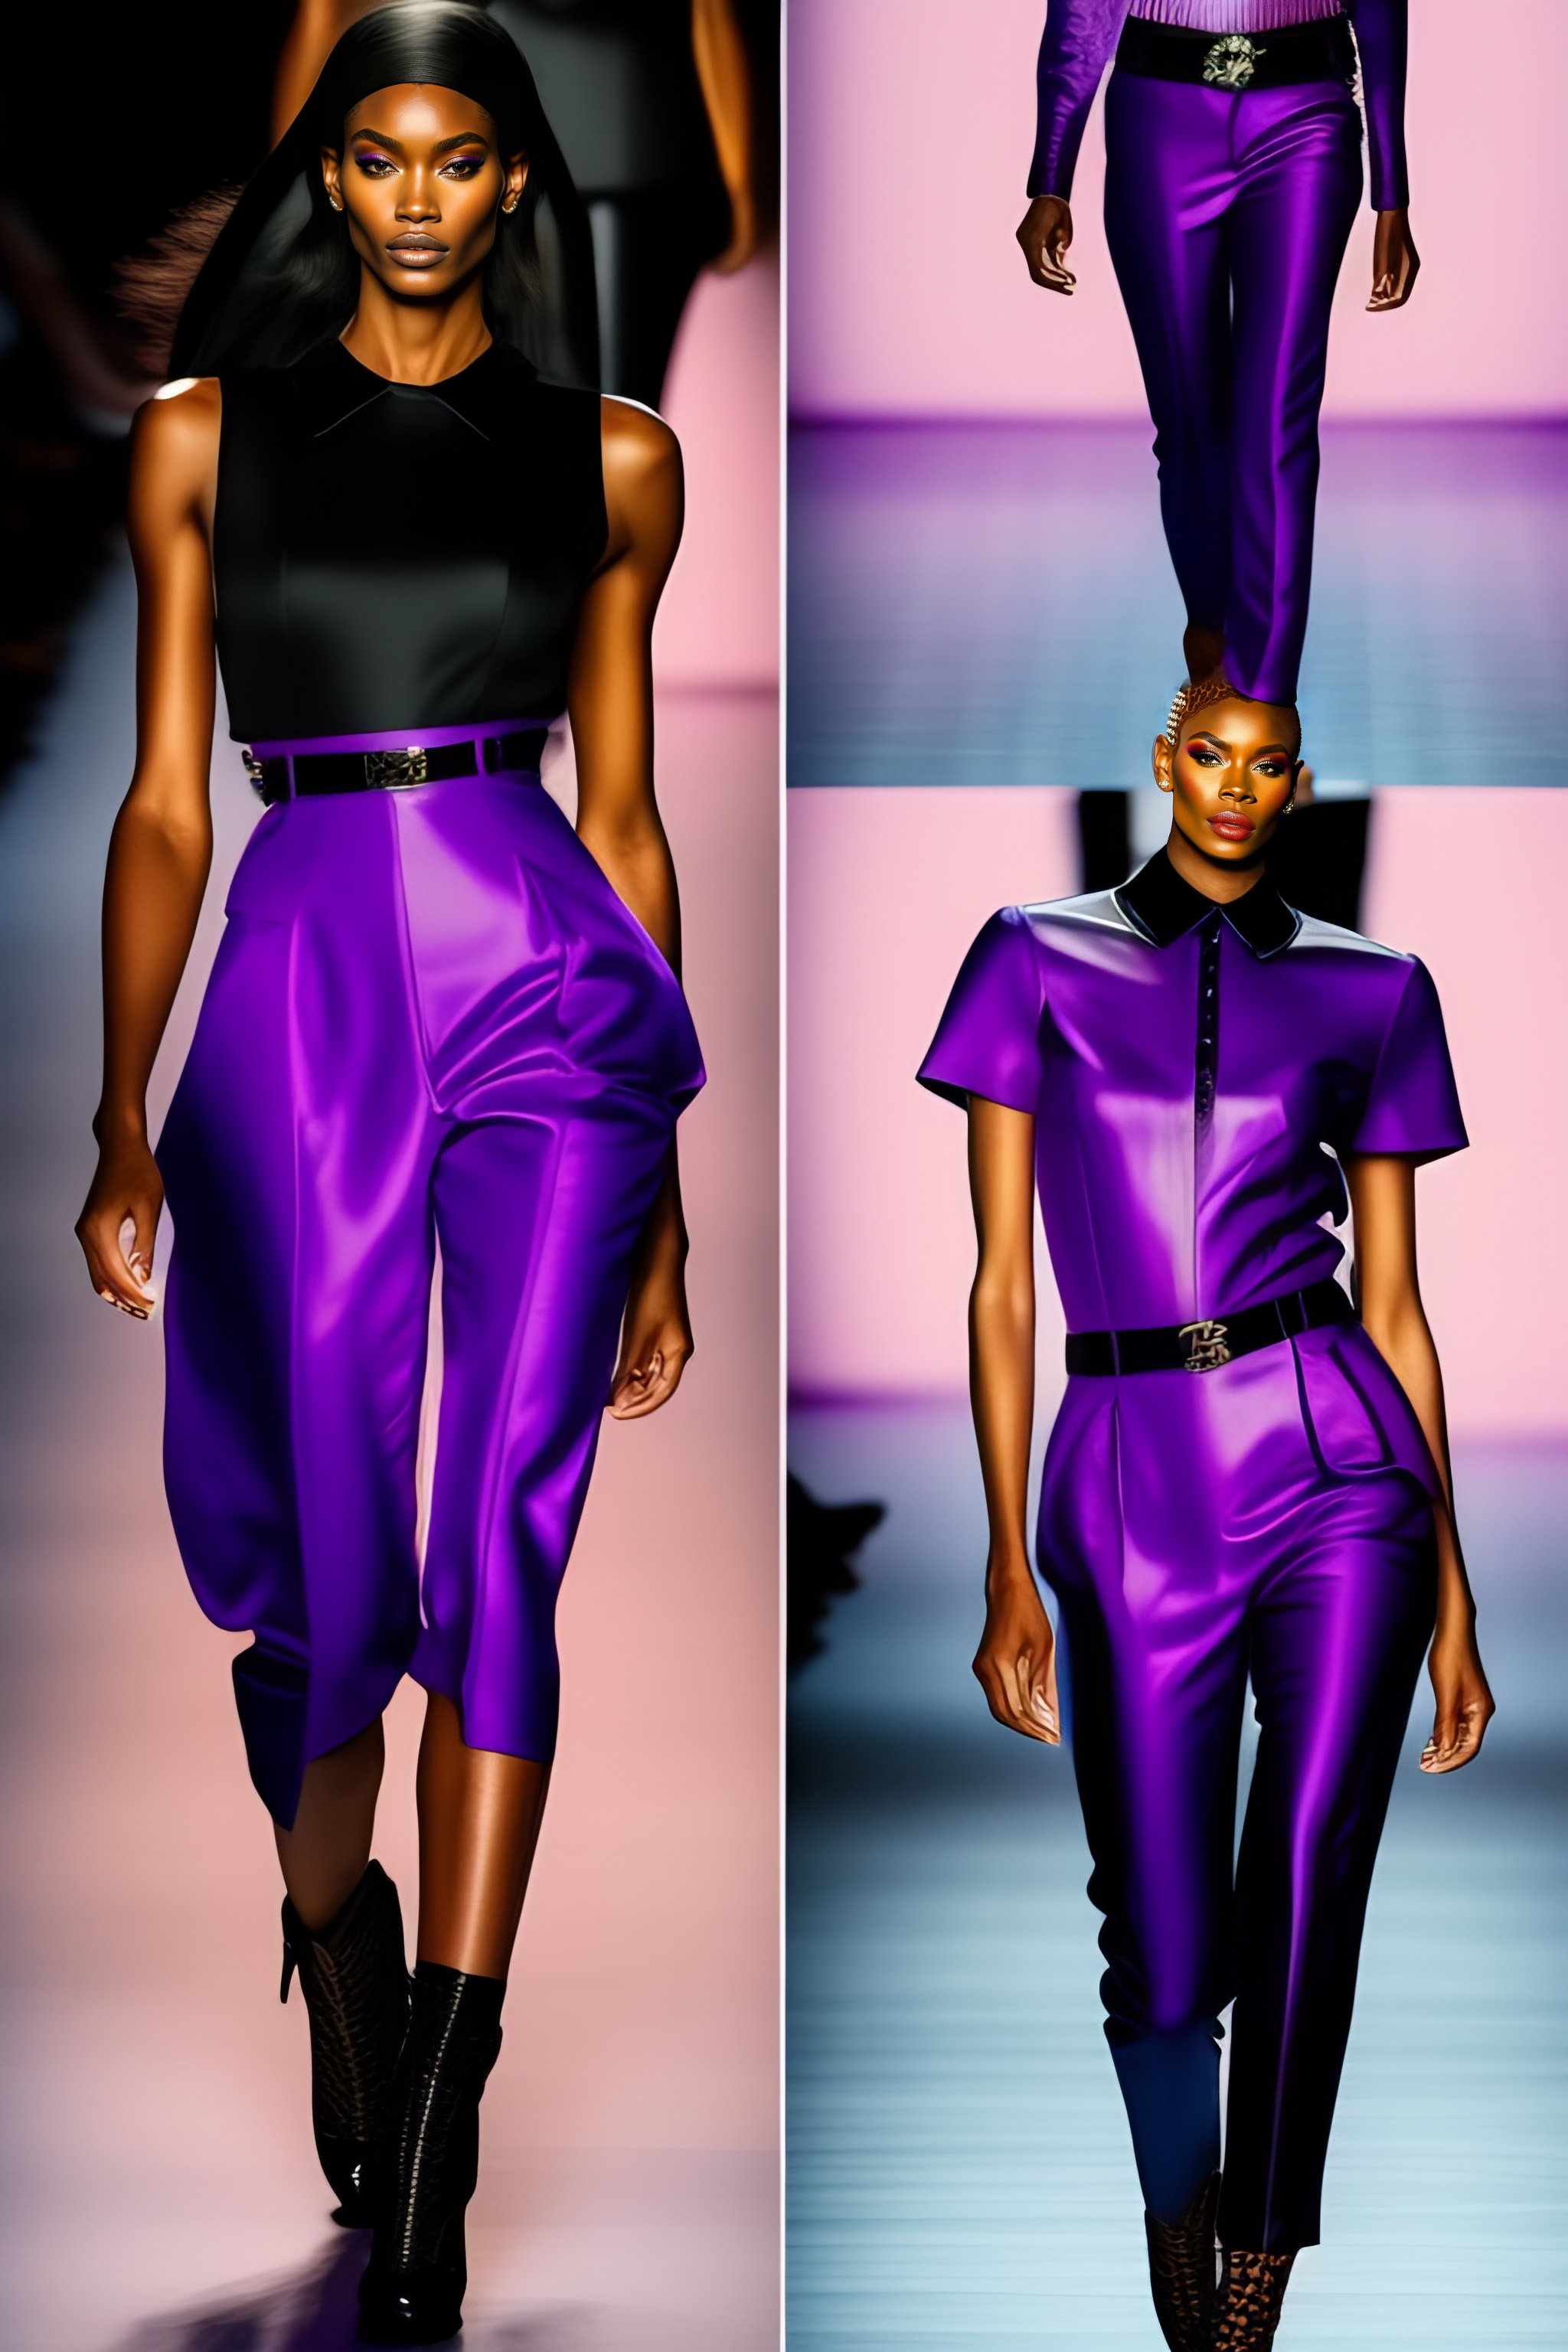 Lexica - fashion show medium size women with purple shirt and black leggings